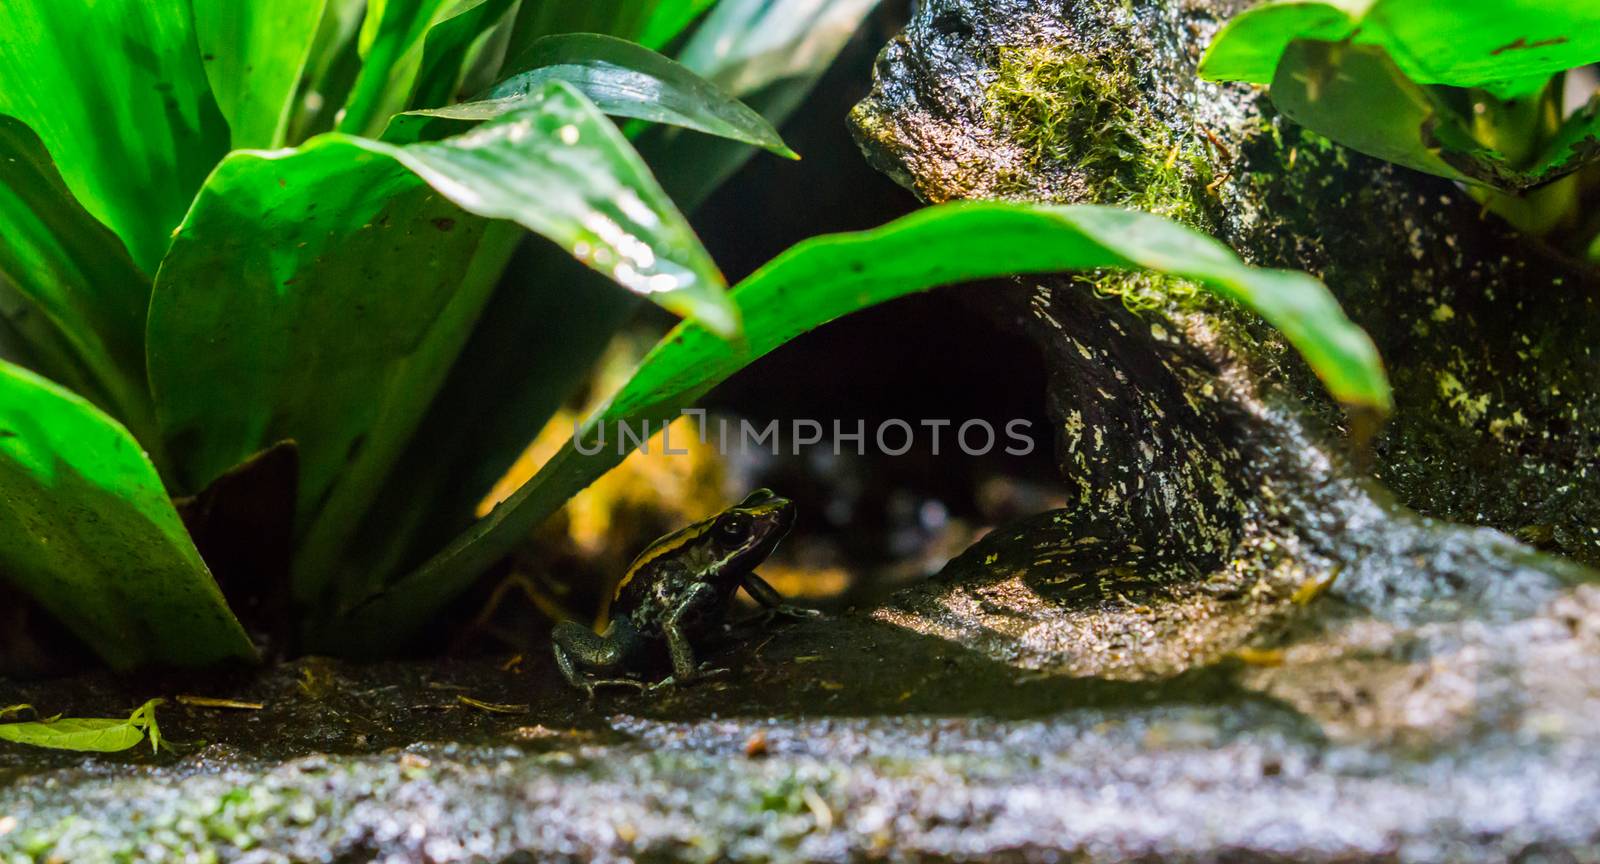 Golfodulcean poison dart frog sitting under a plant, a dangerous and venomous amphibian from Costa Rica by charlottebleijenberg